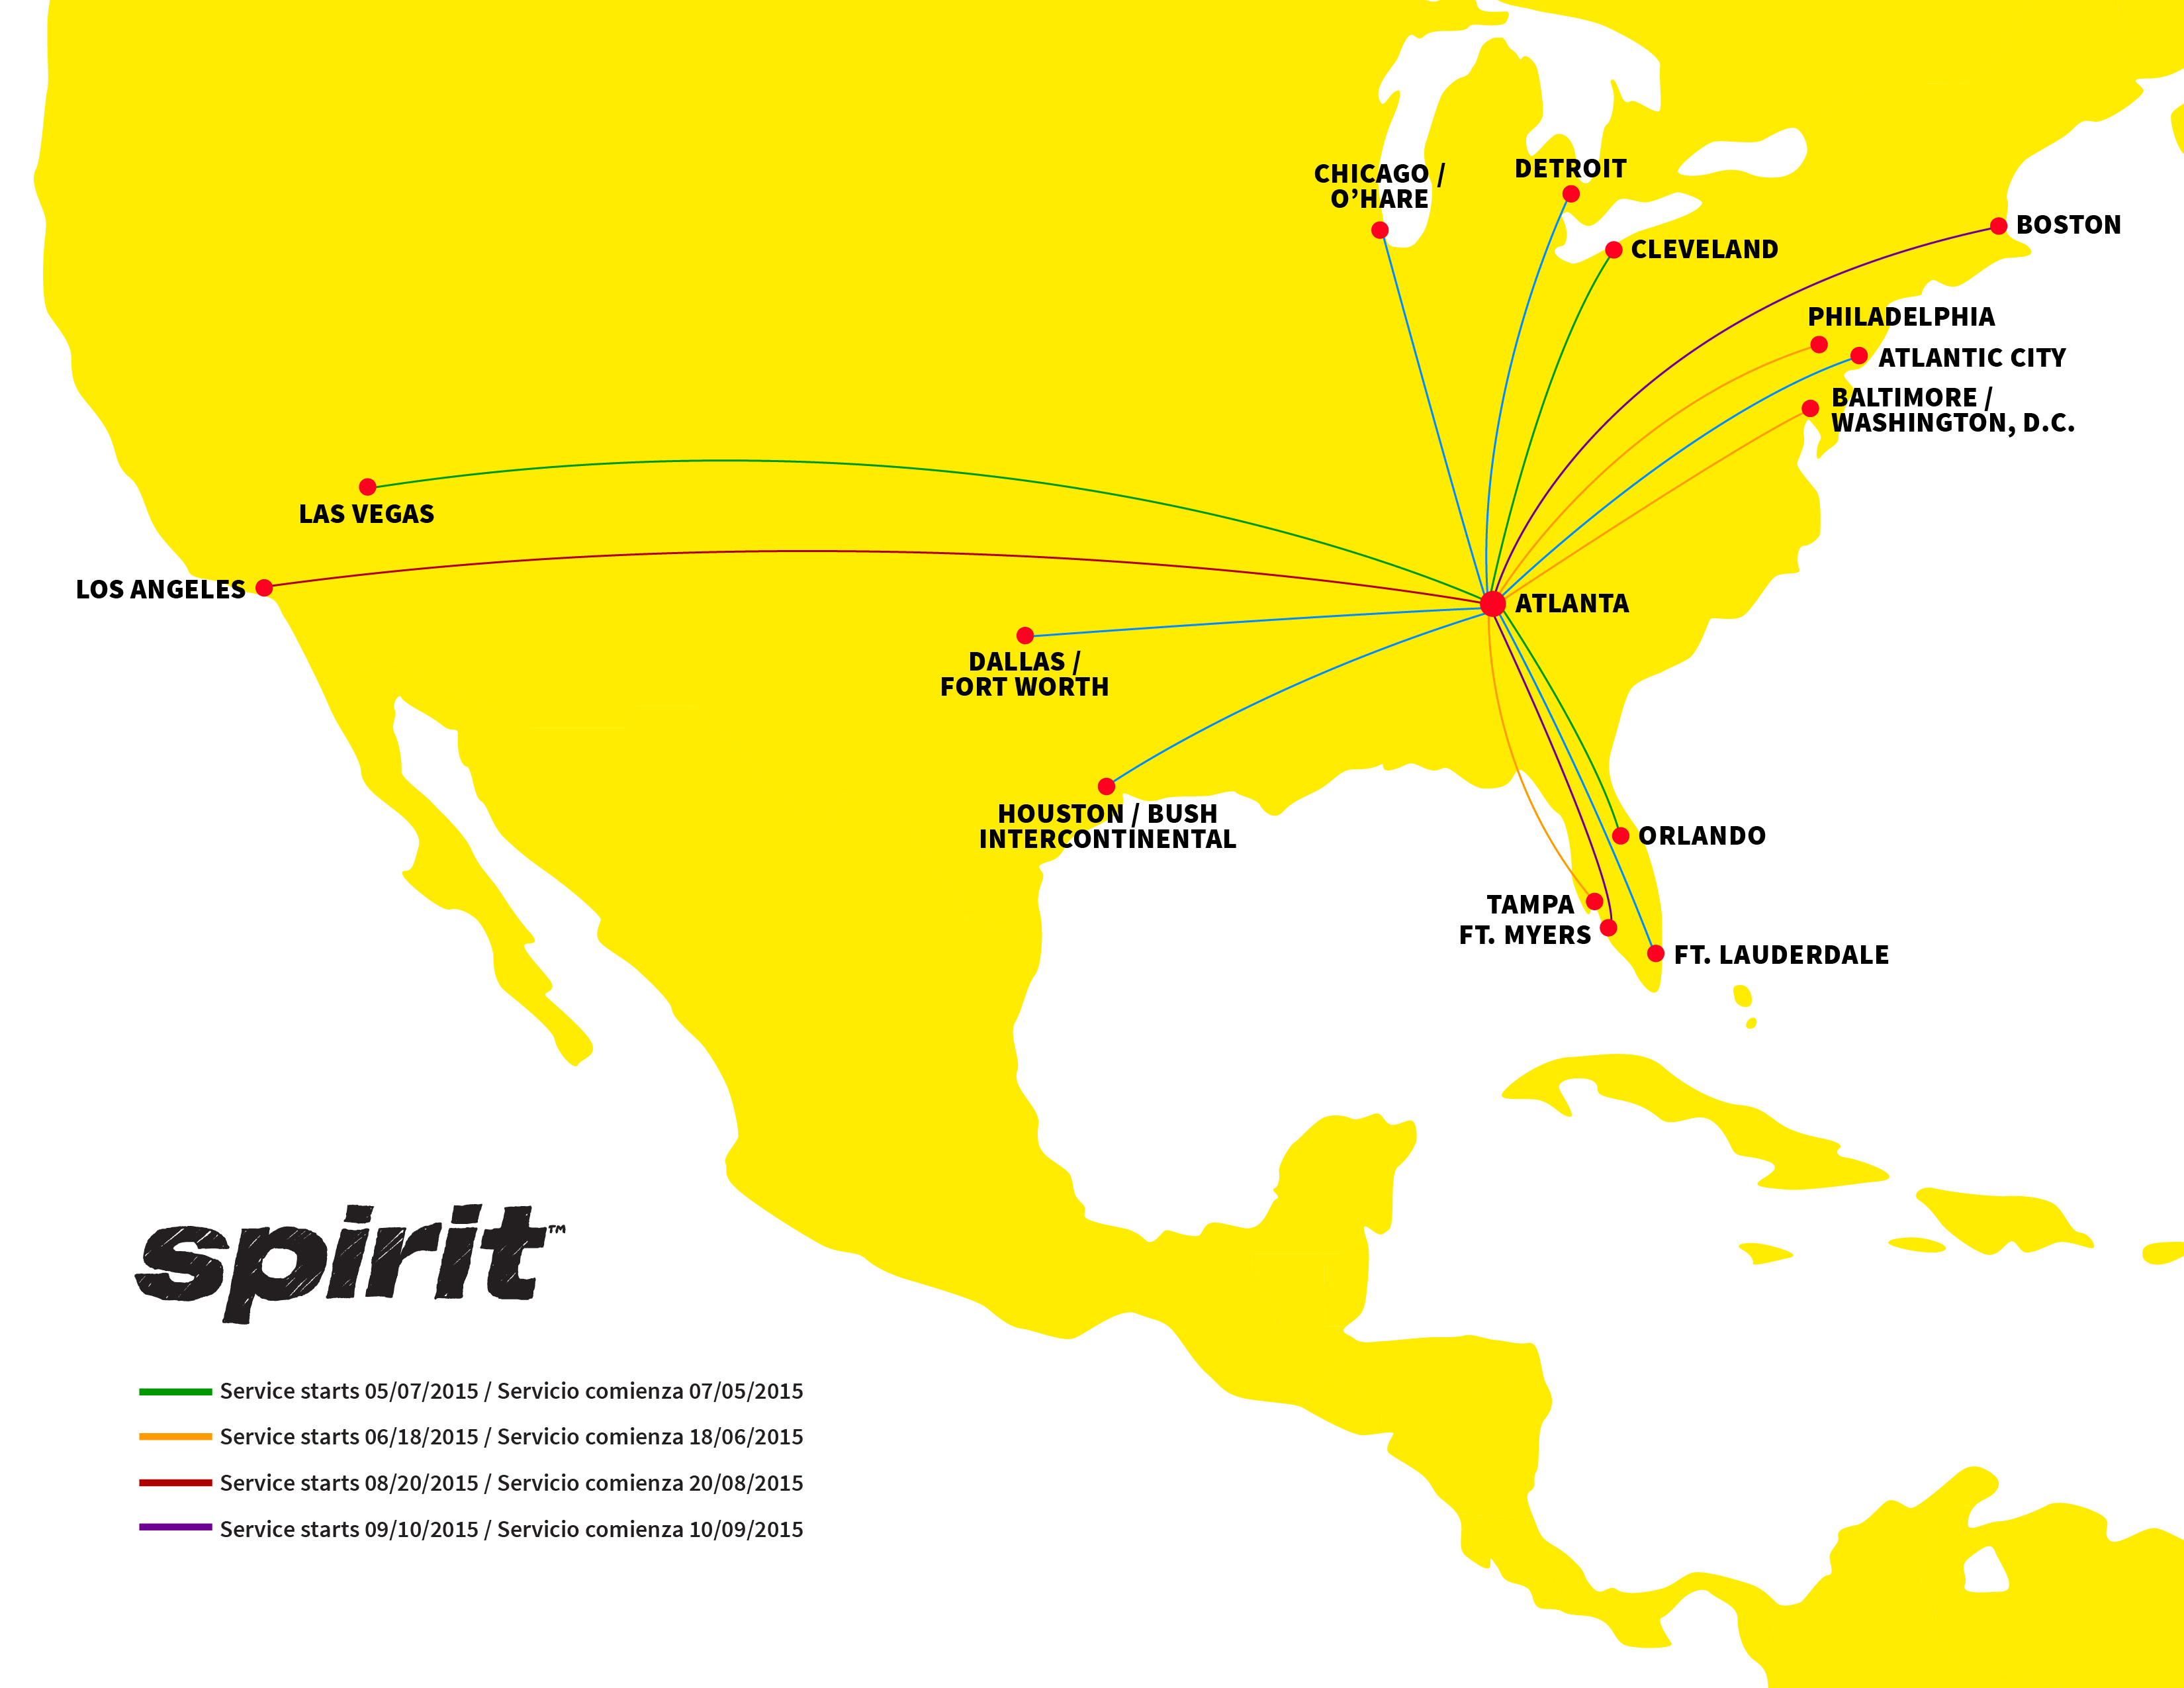 Spirit Airlines Flights To/From Atlanta